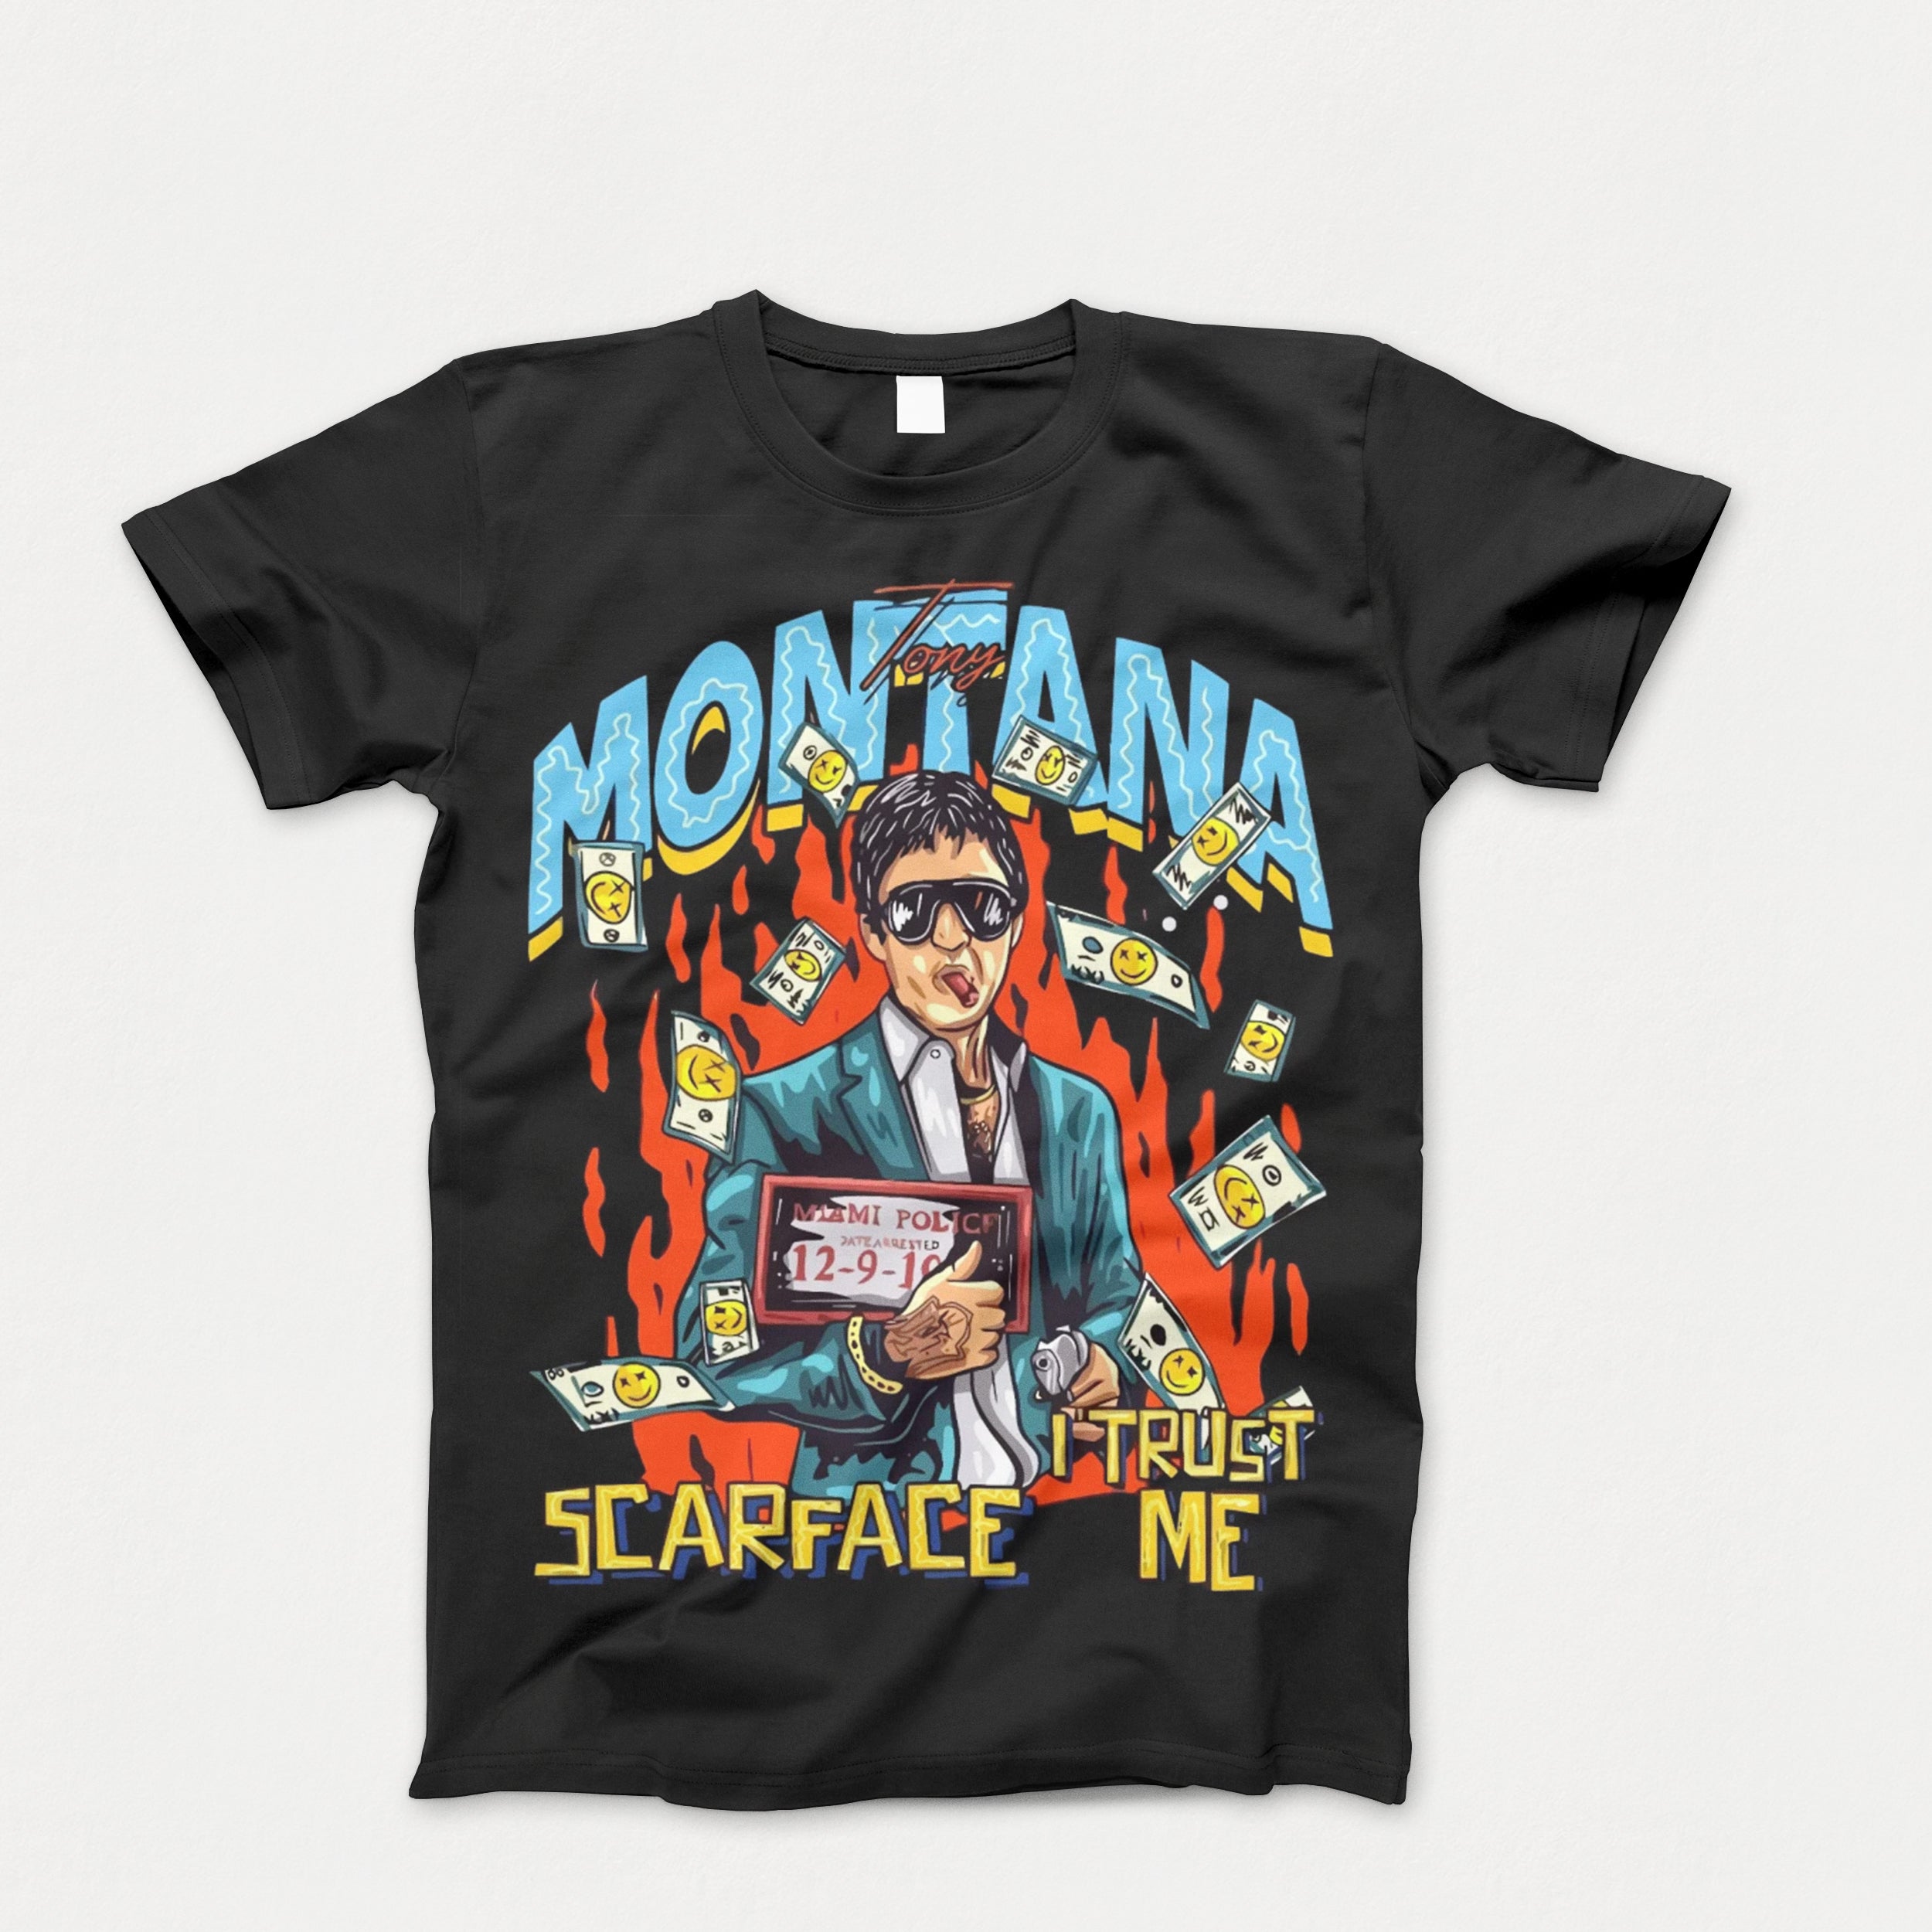 Unisex Adult Montana Tee Shirt